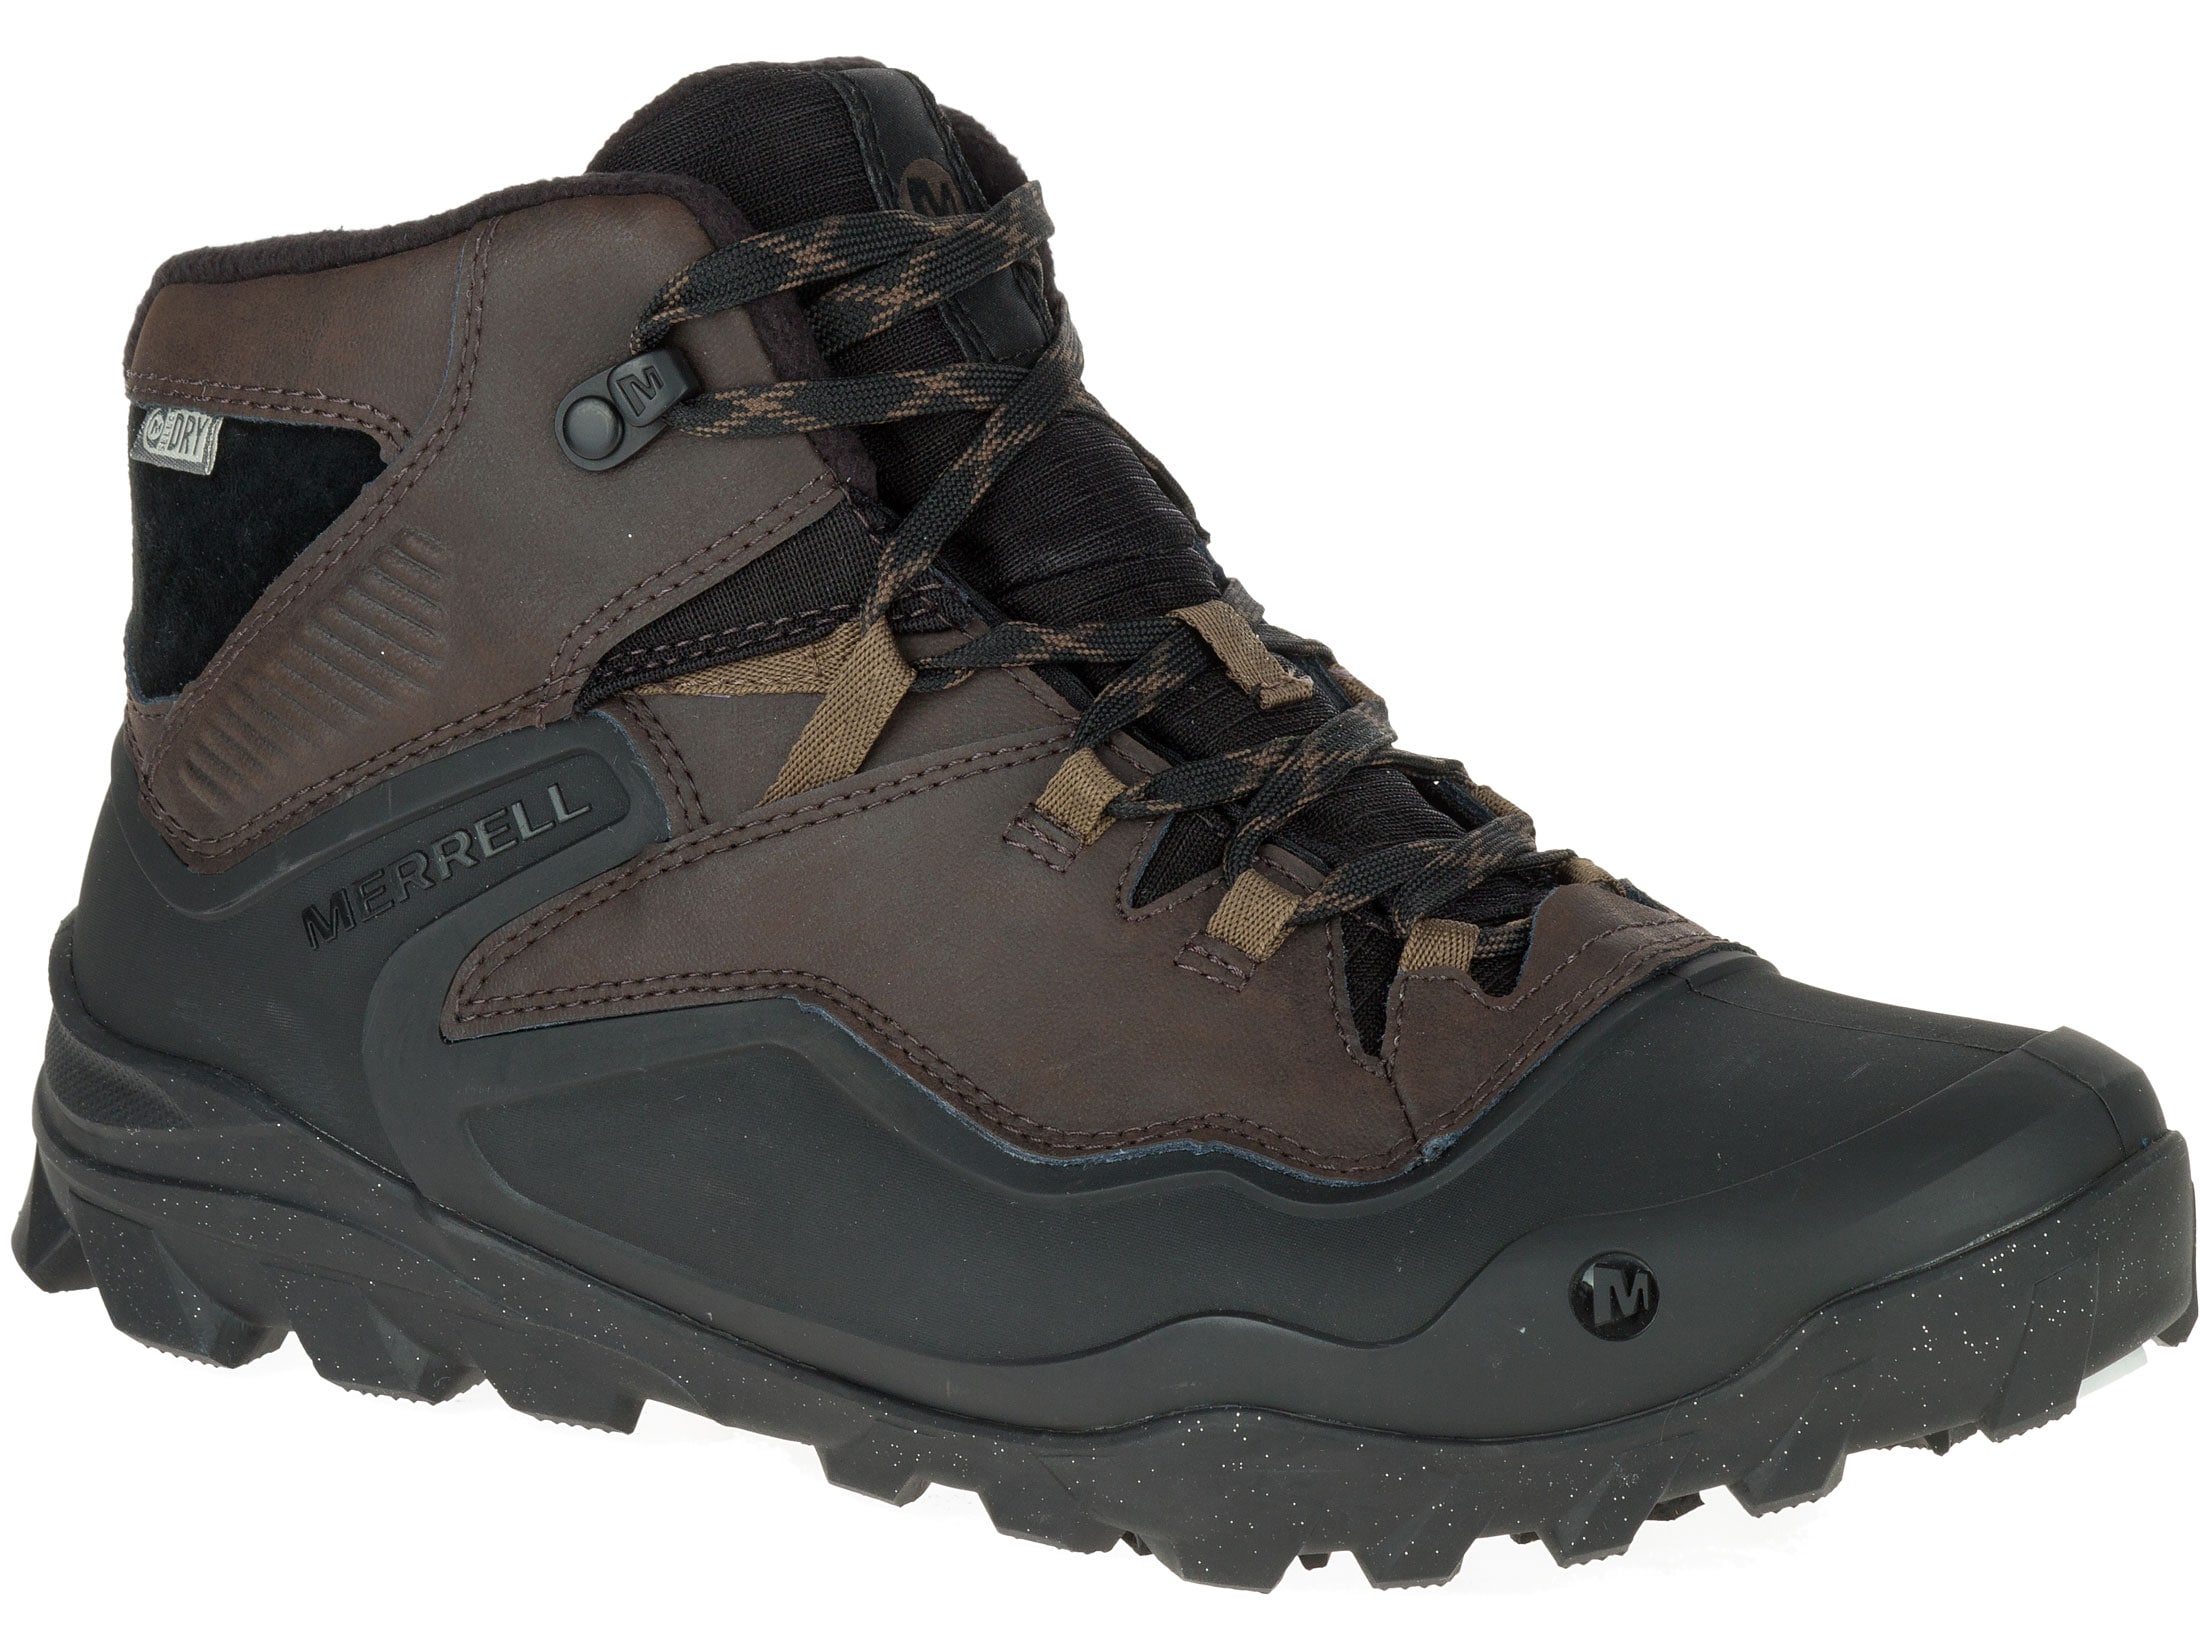 Merrell Overlook 6 Ice+ 5 200 Gram Insulated Waterproof Hiking Boots